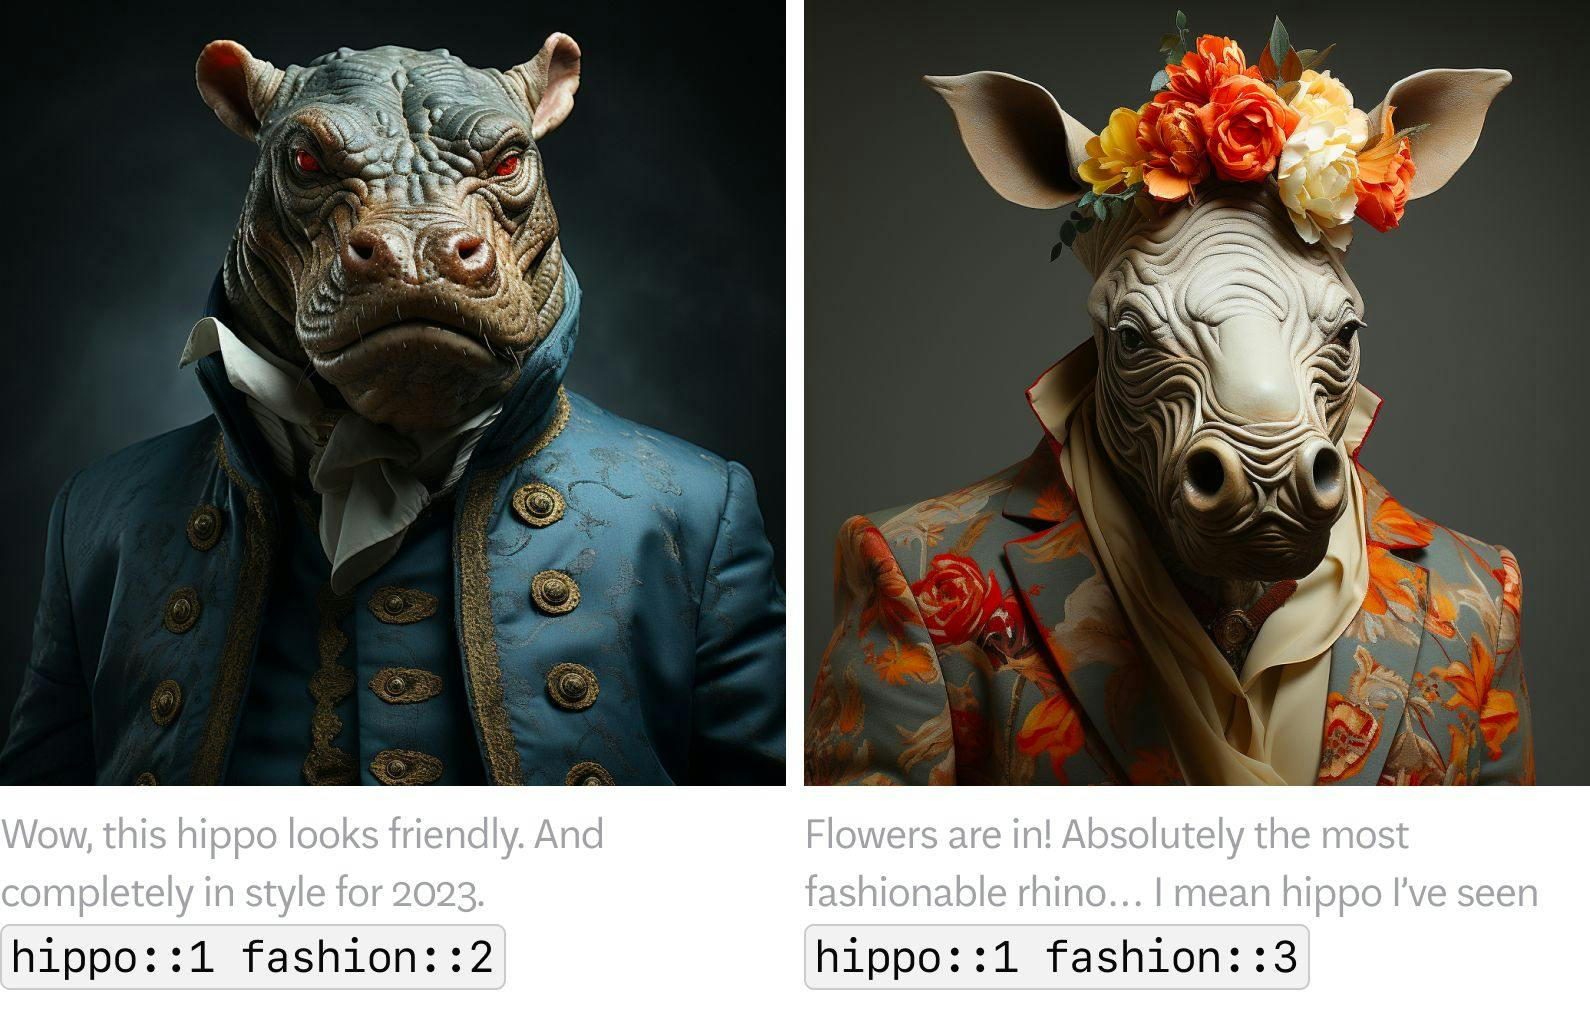 AI-generated image of hippopotamus on grey background, studio light, wearing fashionable jackets and flowers